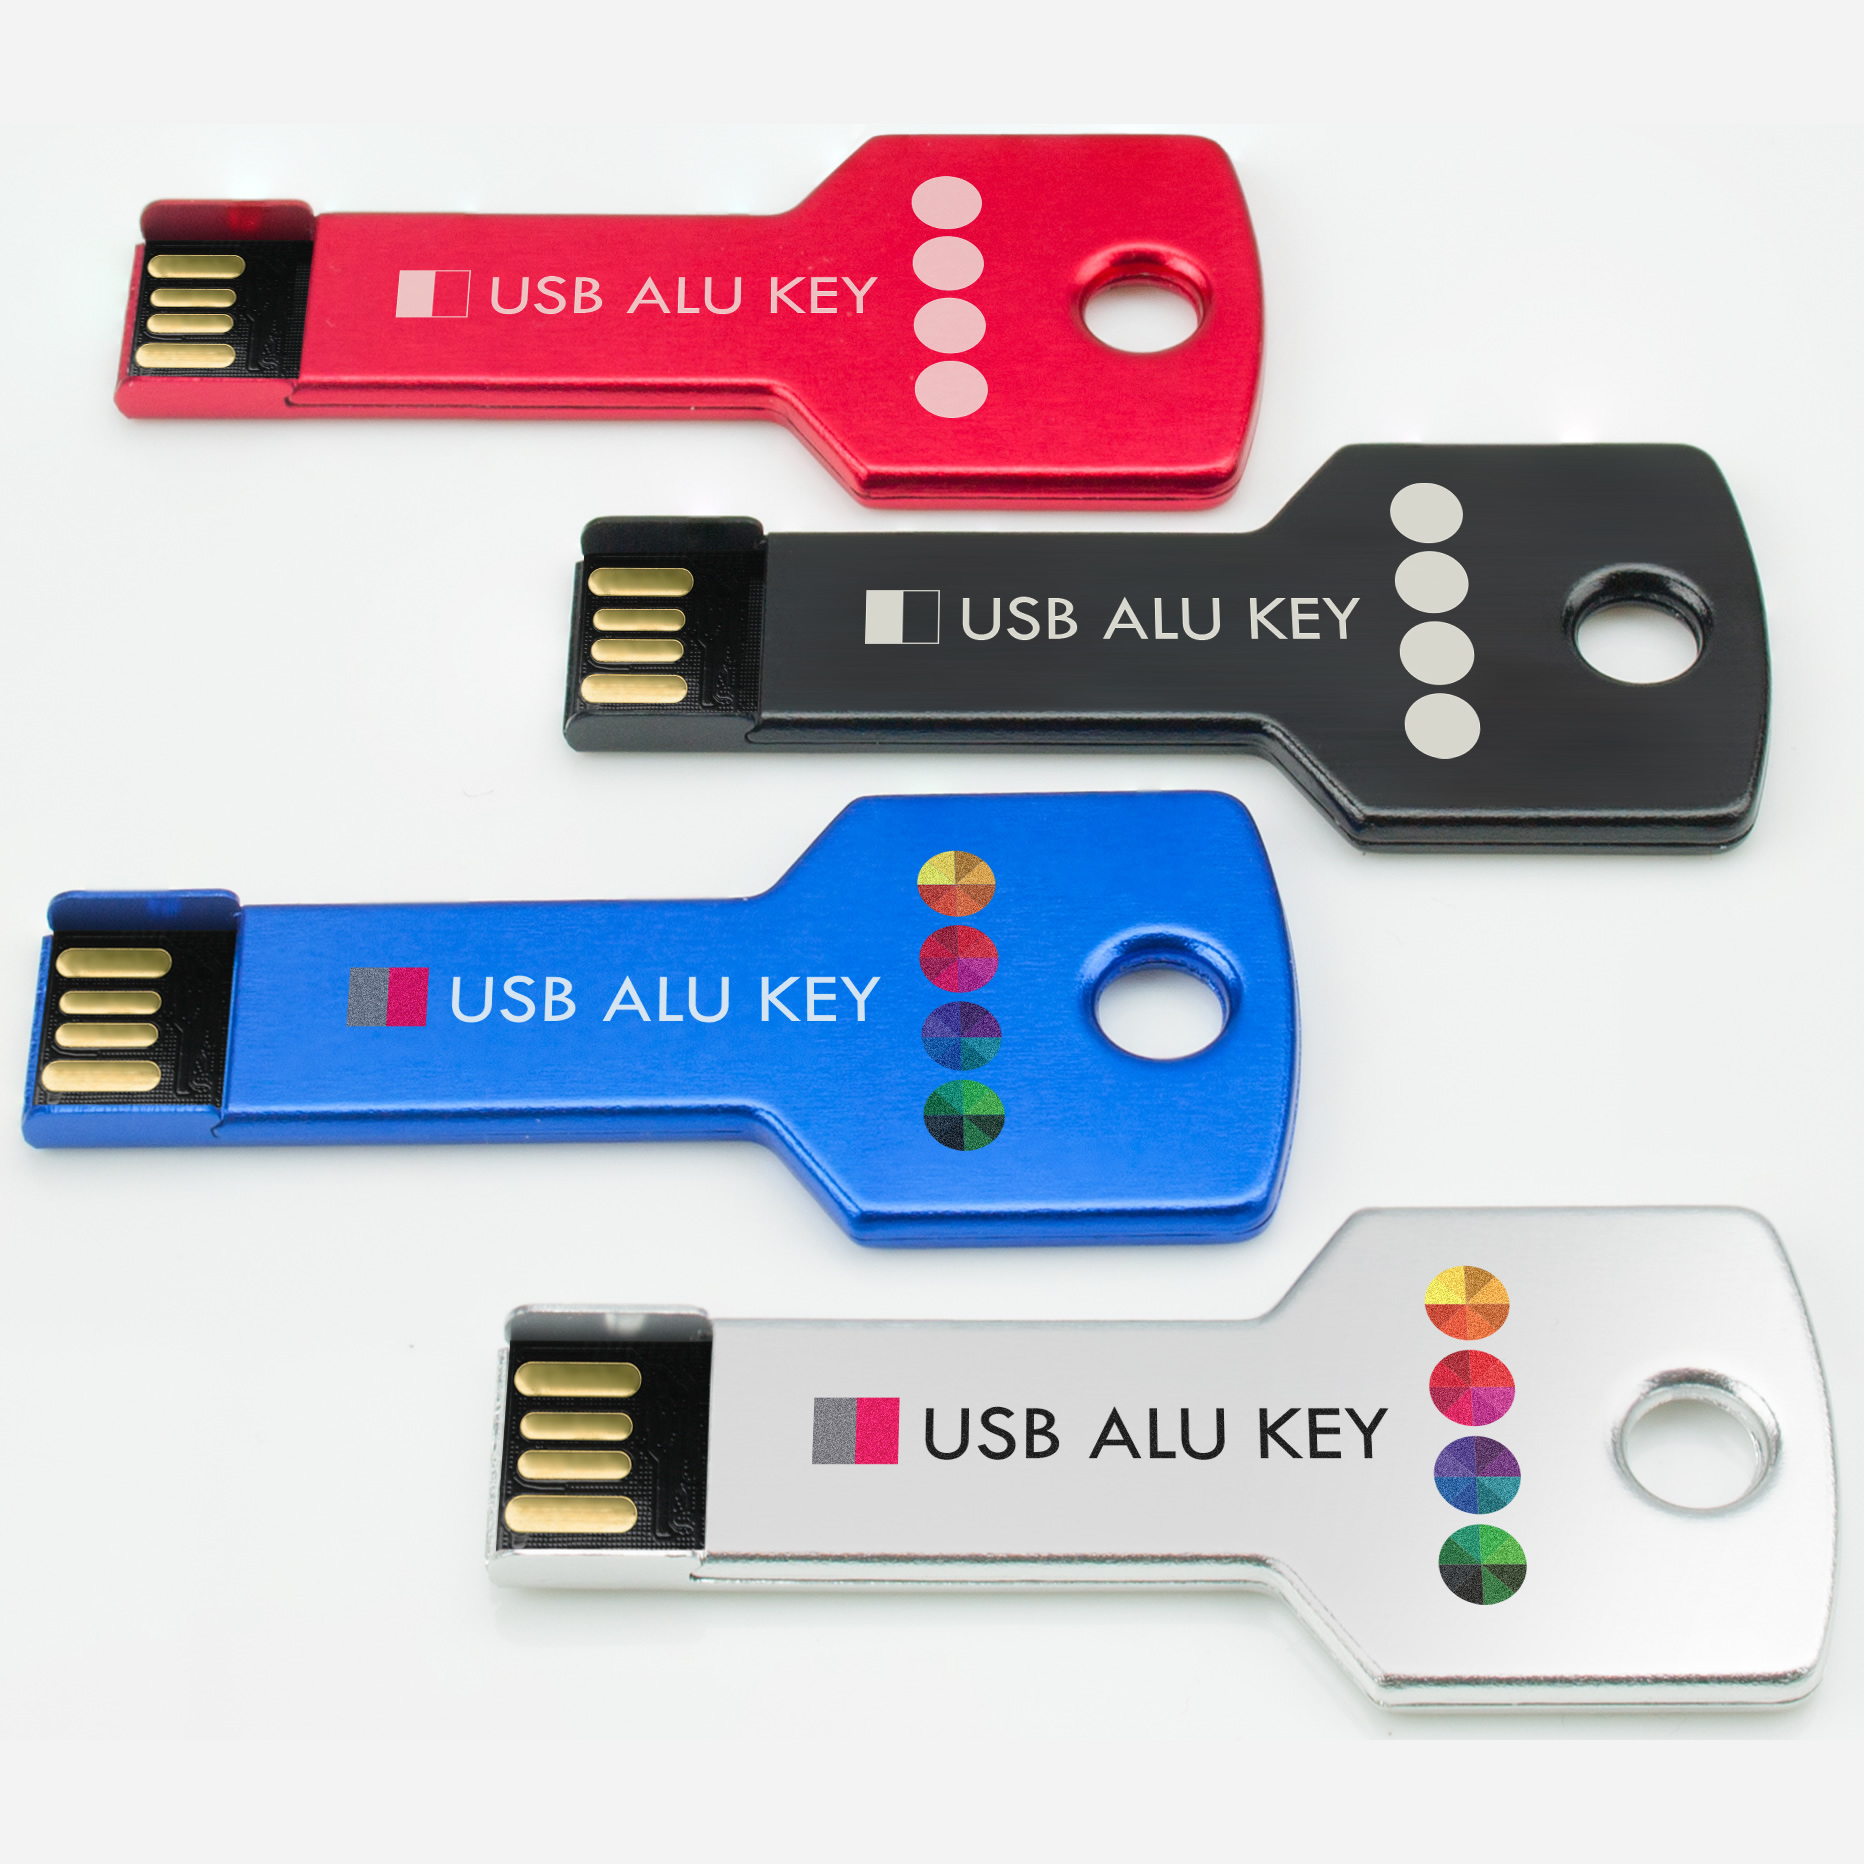 USB Alu Key